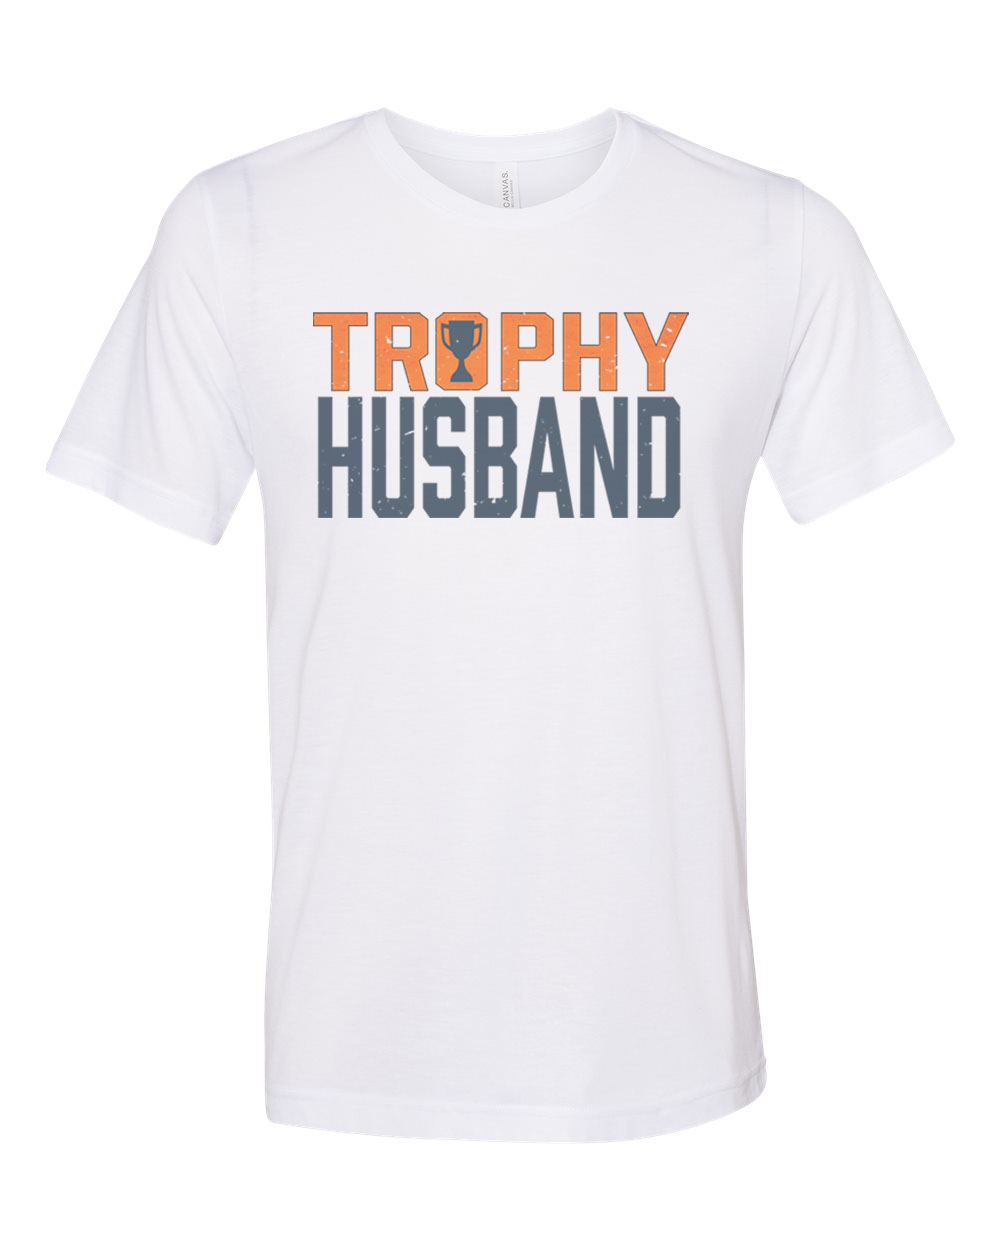 Trophy Husband Shirt, Gift For Him, Hubby Shirt, Trophy Husband, Father's Day Gift, Gift For Husband, Funny Husband Shirt, Husband Gift, White, 2XL - image 1 of 1